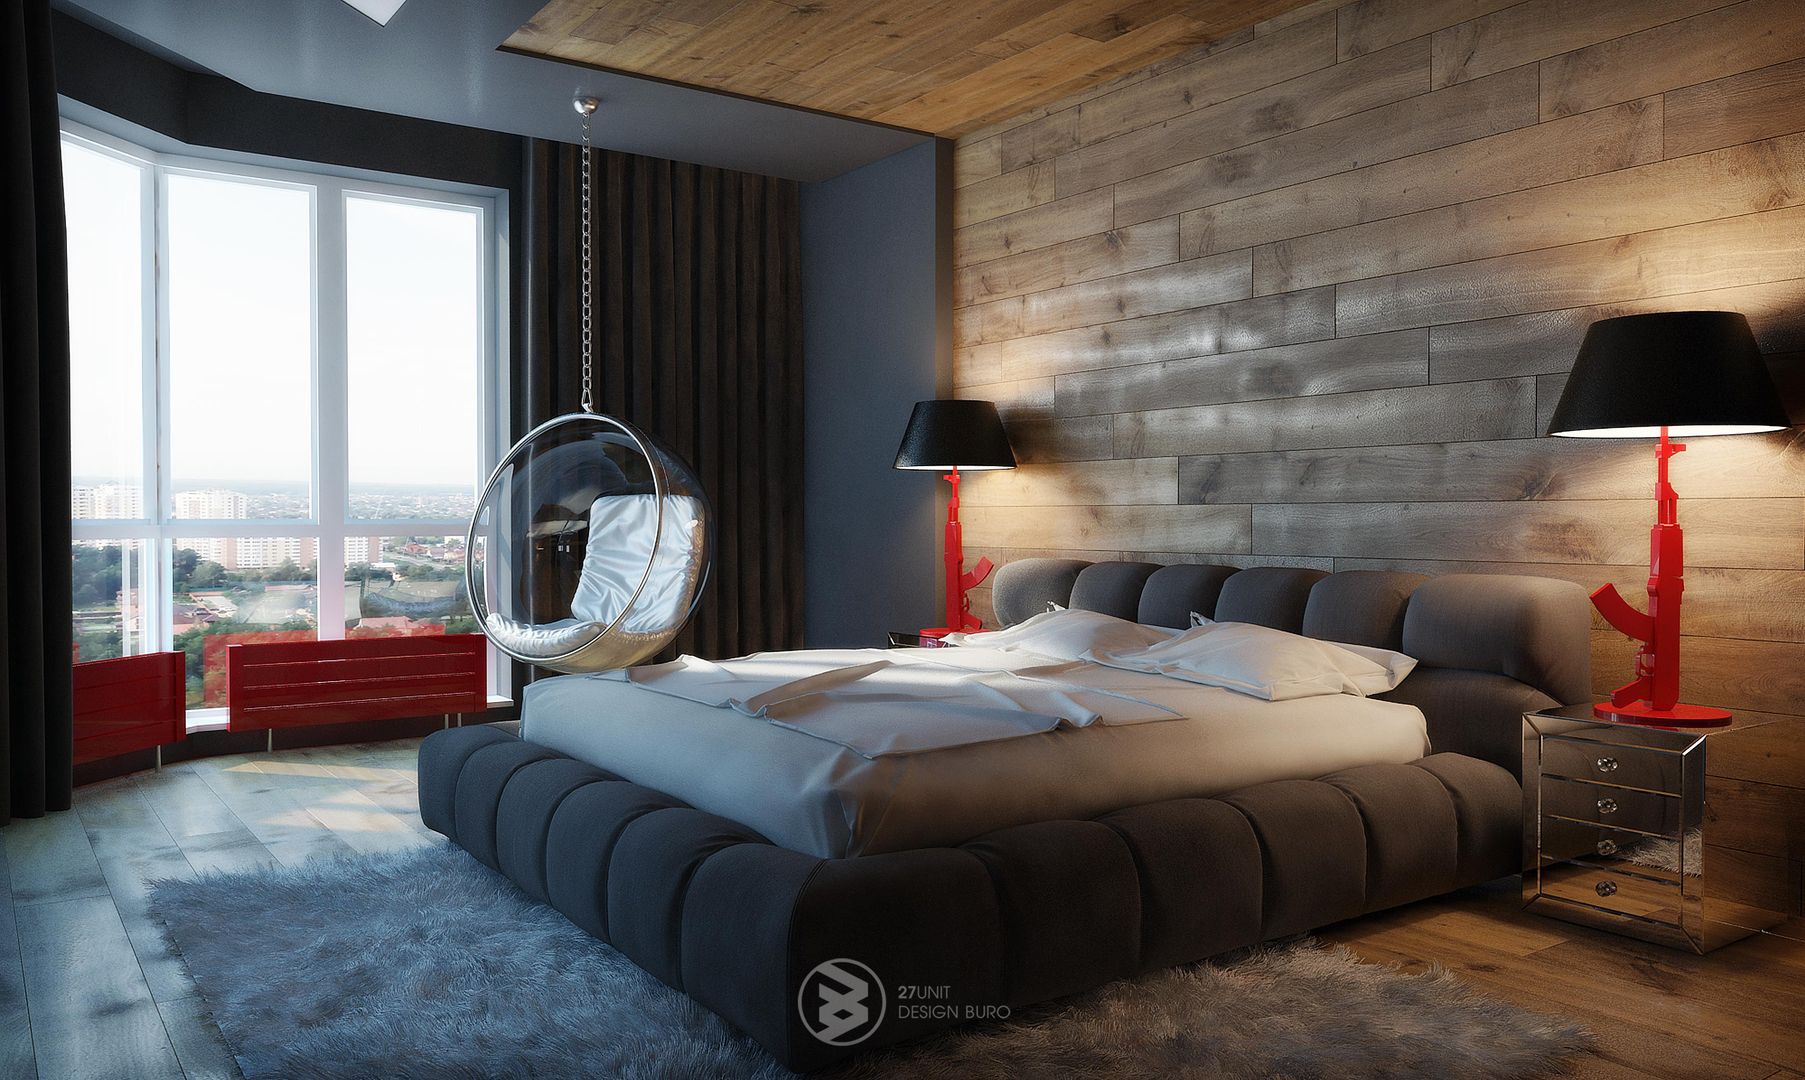 Квартира в Броварах 2, 27Unit design buro 27Unit design buro Eclectische slaapkamers